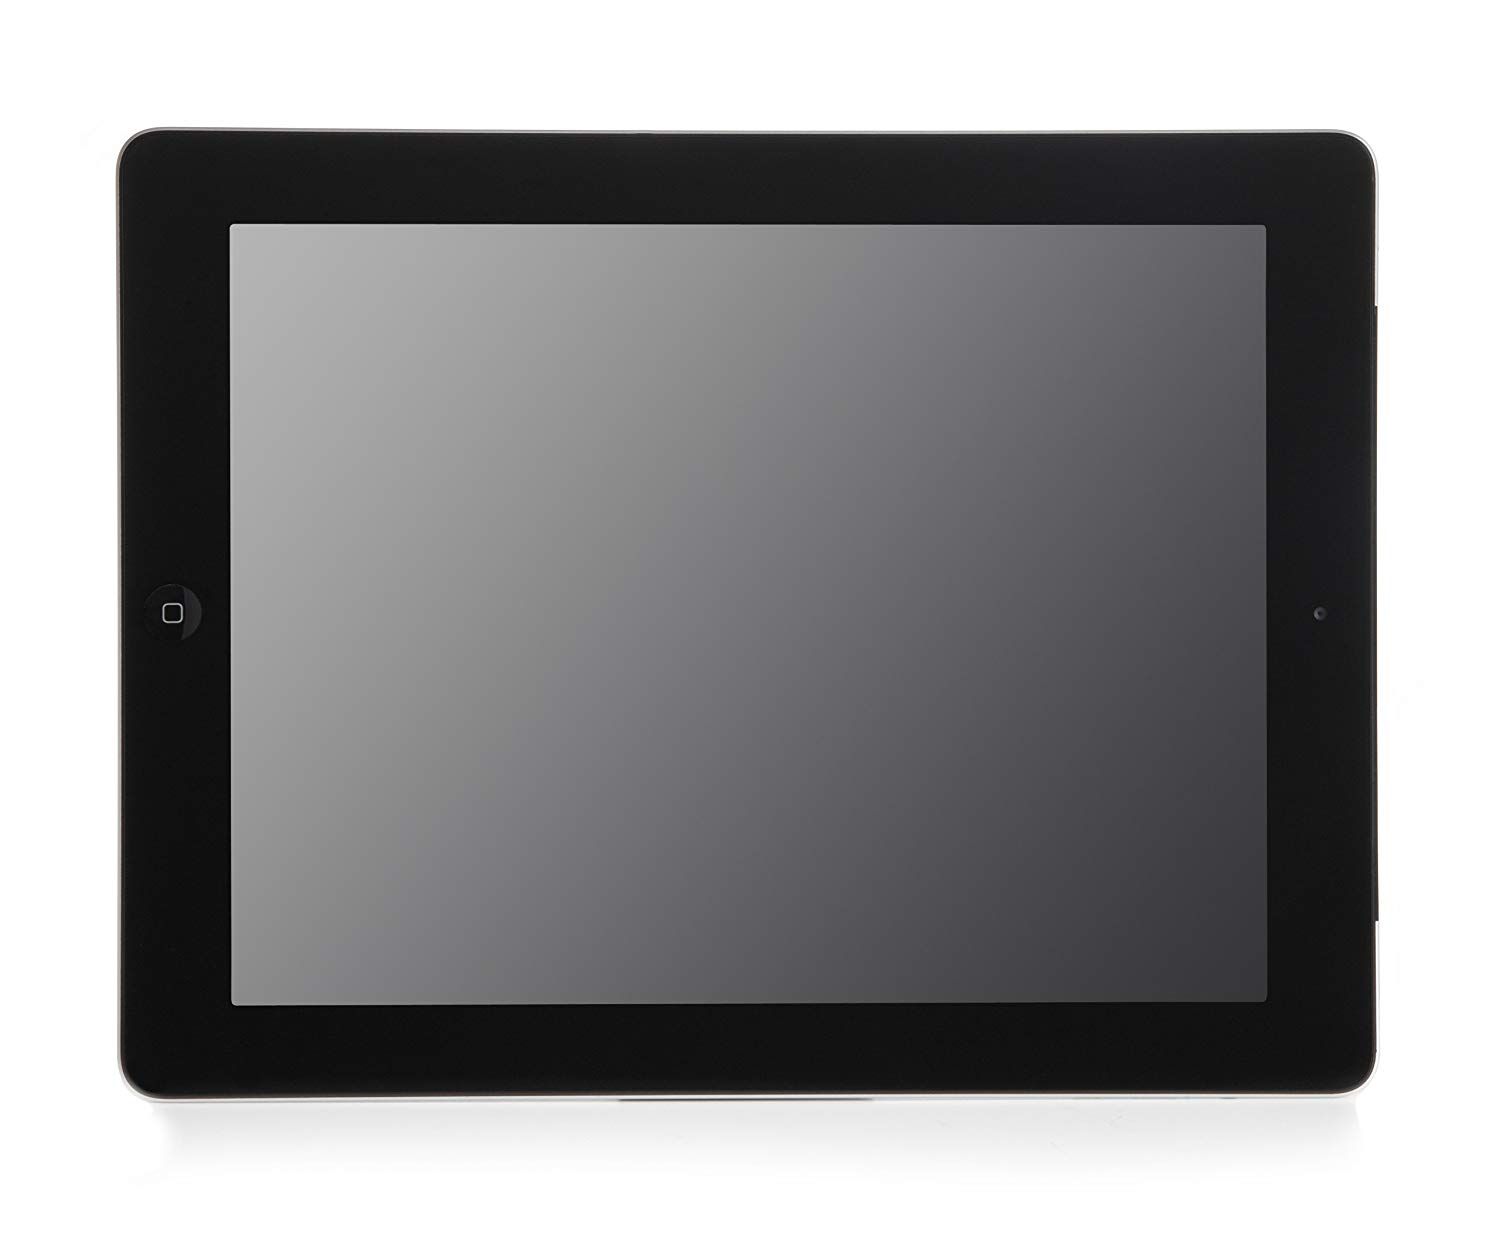 Restored Apple iPad 4 16GB 9.7" Retina Display Tablet Wi-Fi Bluetooth & Camera - Black (Refurbished) - image 4 of 4